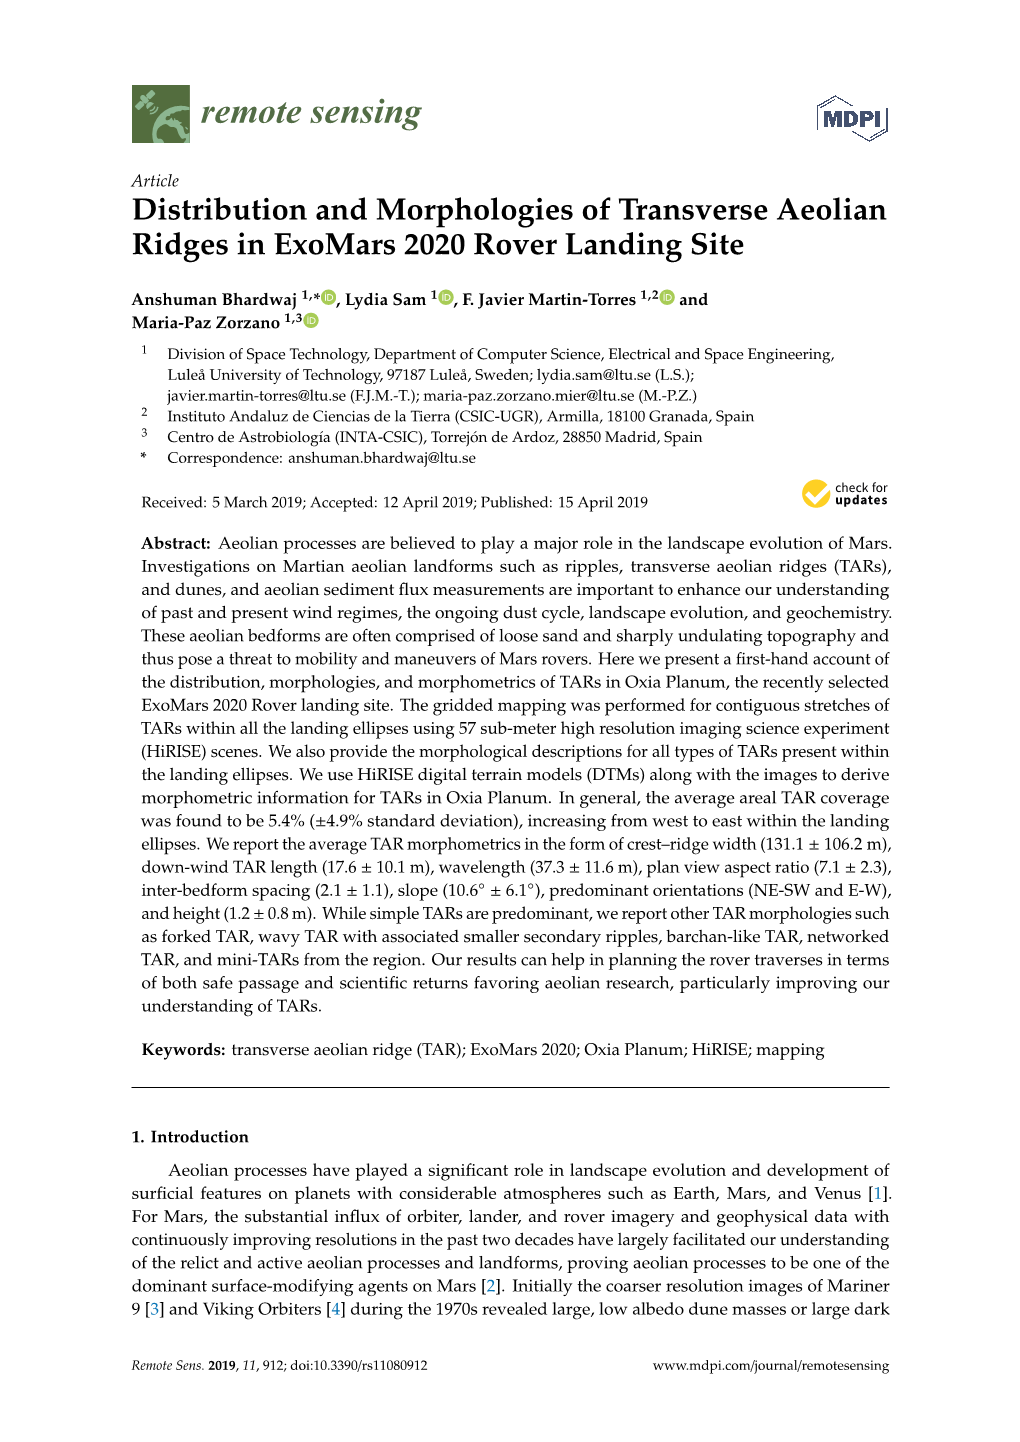 Distribution and Morphologies of Transverse Aeolian Ridges in Exomars 2020 Rover Landing Site